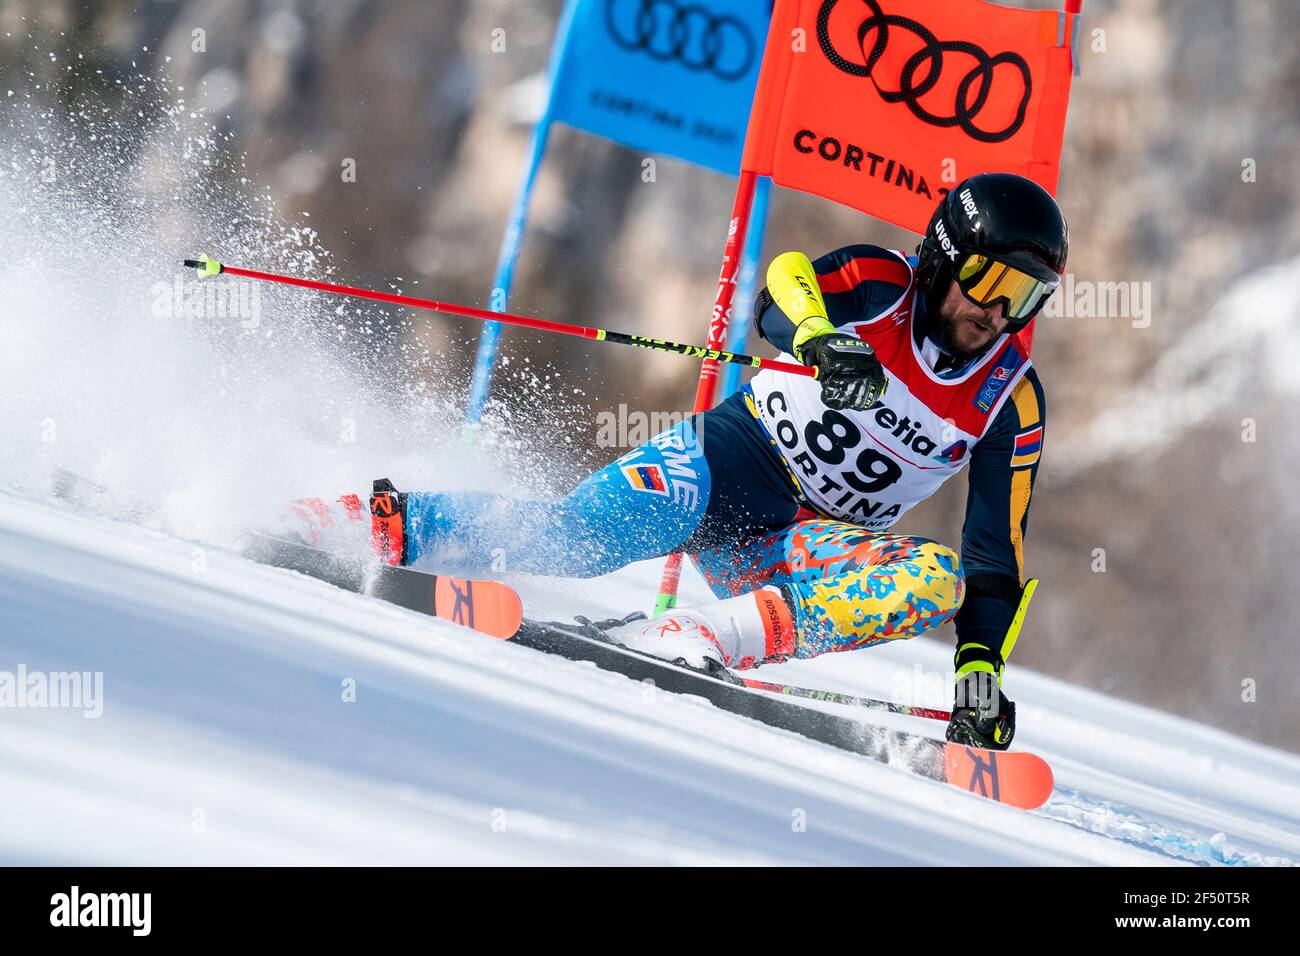 Cortina d'Ampezzo, Italien 19. Februar 2021: KARAPETYAN Ashot (ARM) im Wettbewerb der TELEPASS FIS ALPINE SKI WORLD CHAMPIONSHIPS 2021 Men's Giant Stockfoto